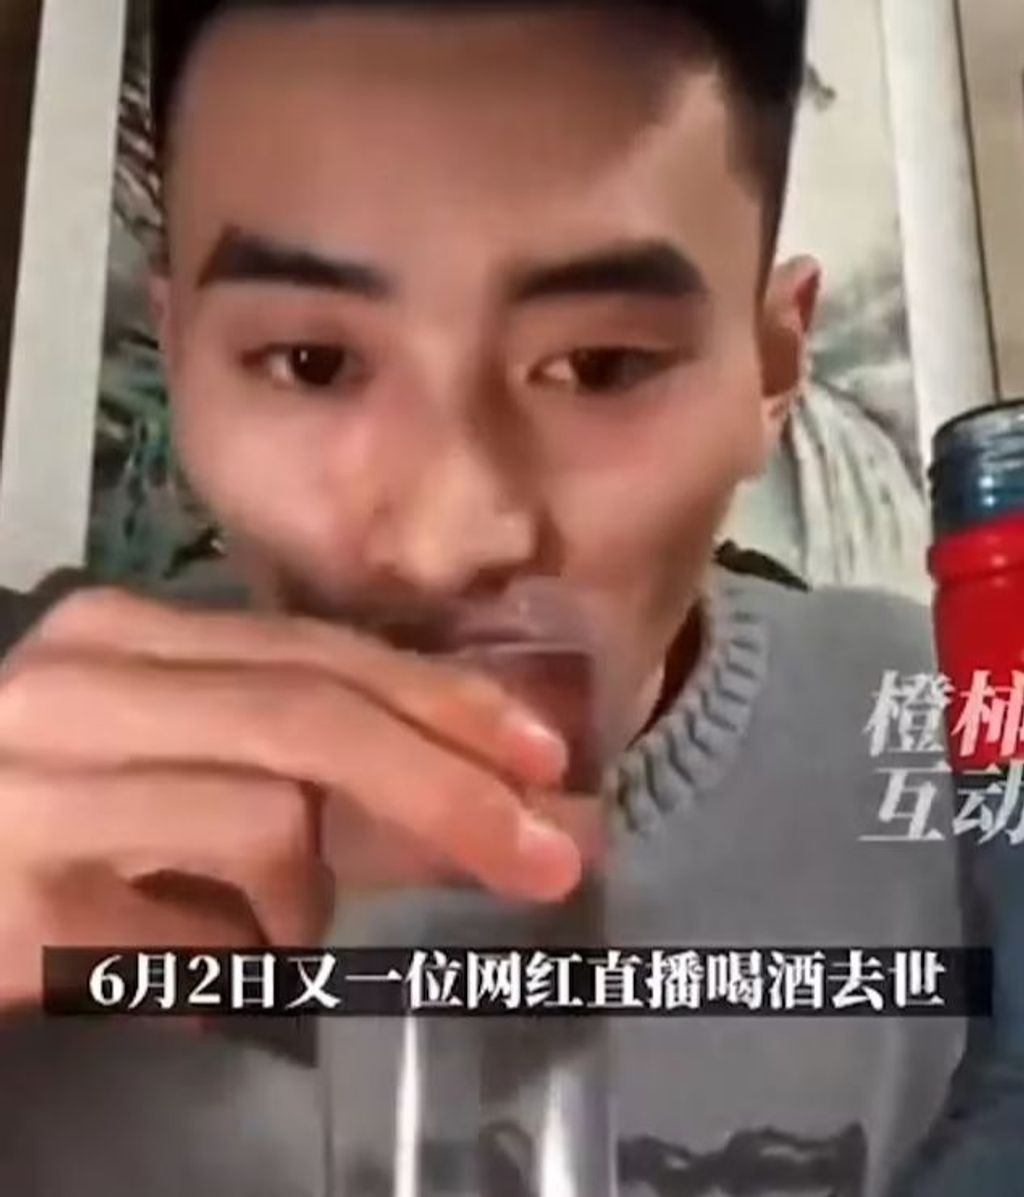 Un influencer de China muere tras beberse en directo un litro de licor